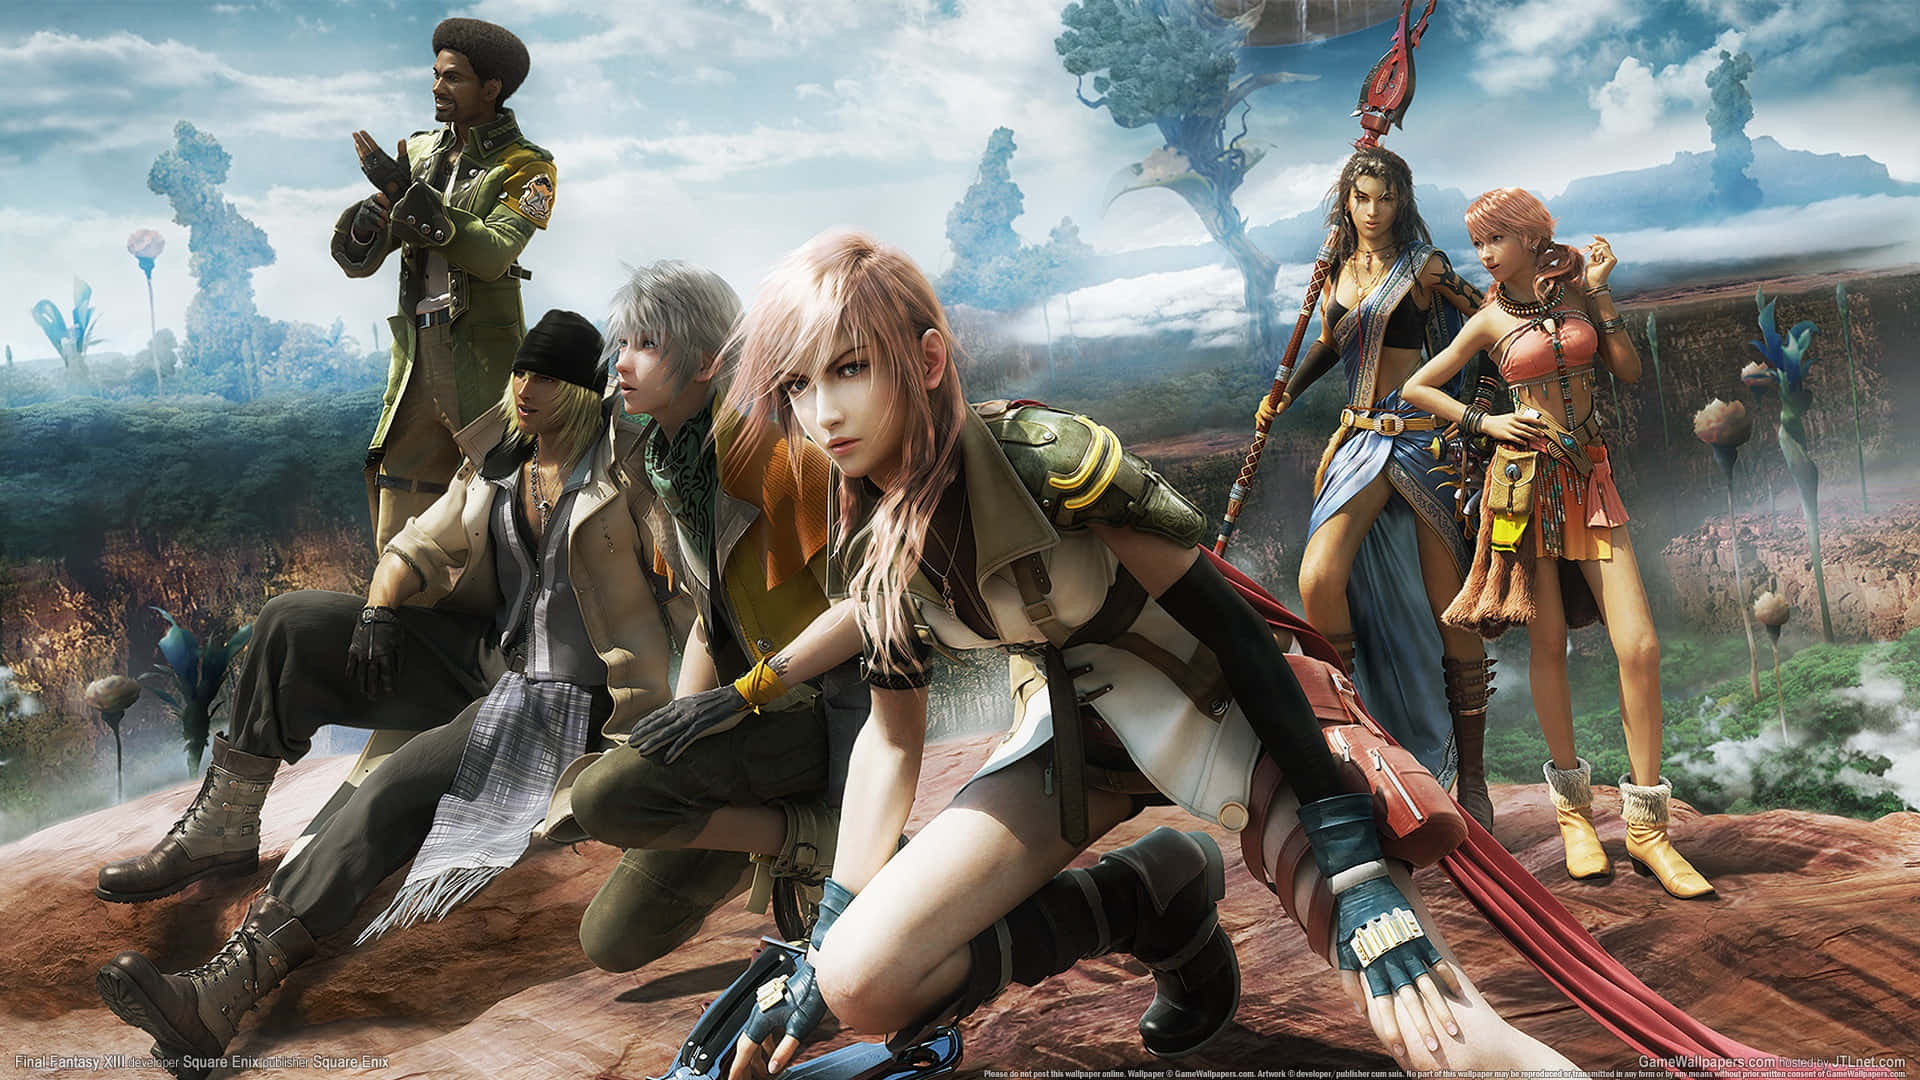 Play Final Fantasy XV in stunning 1080p